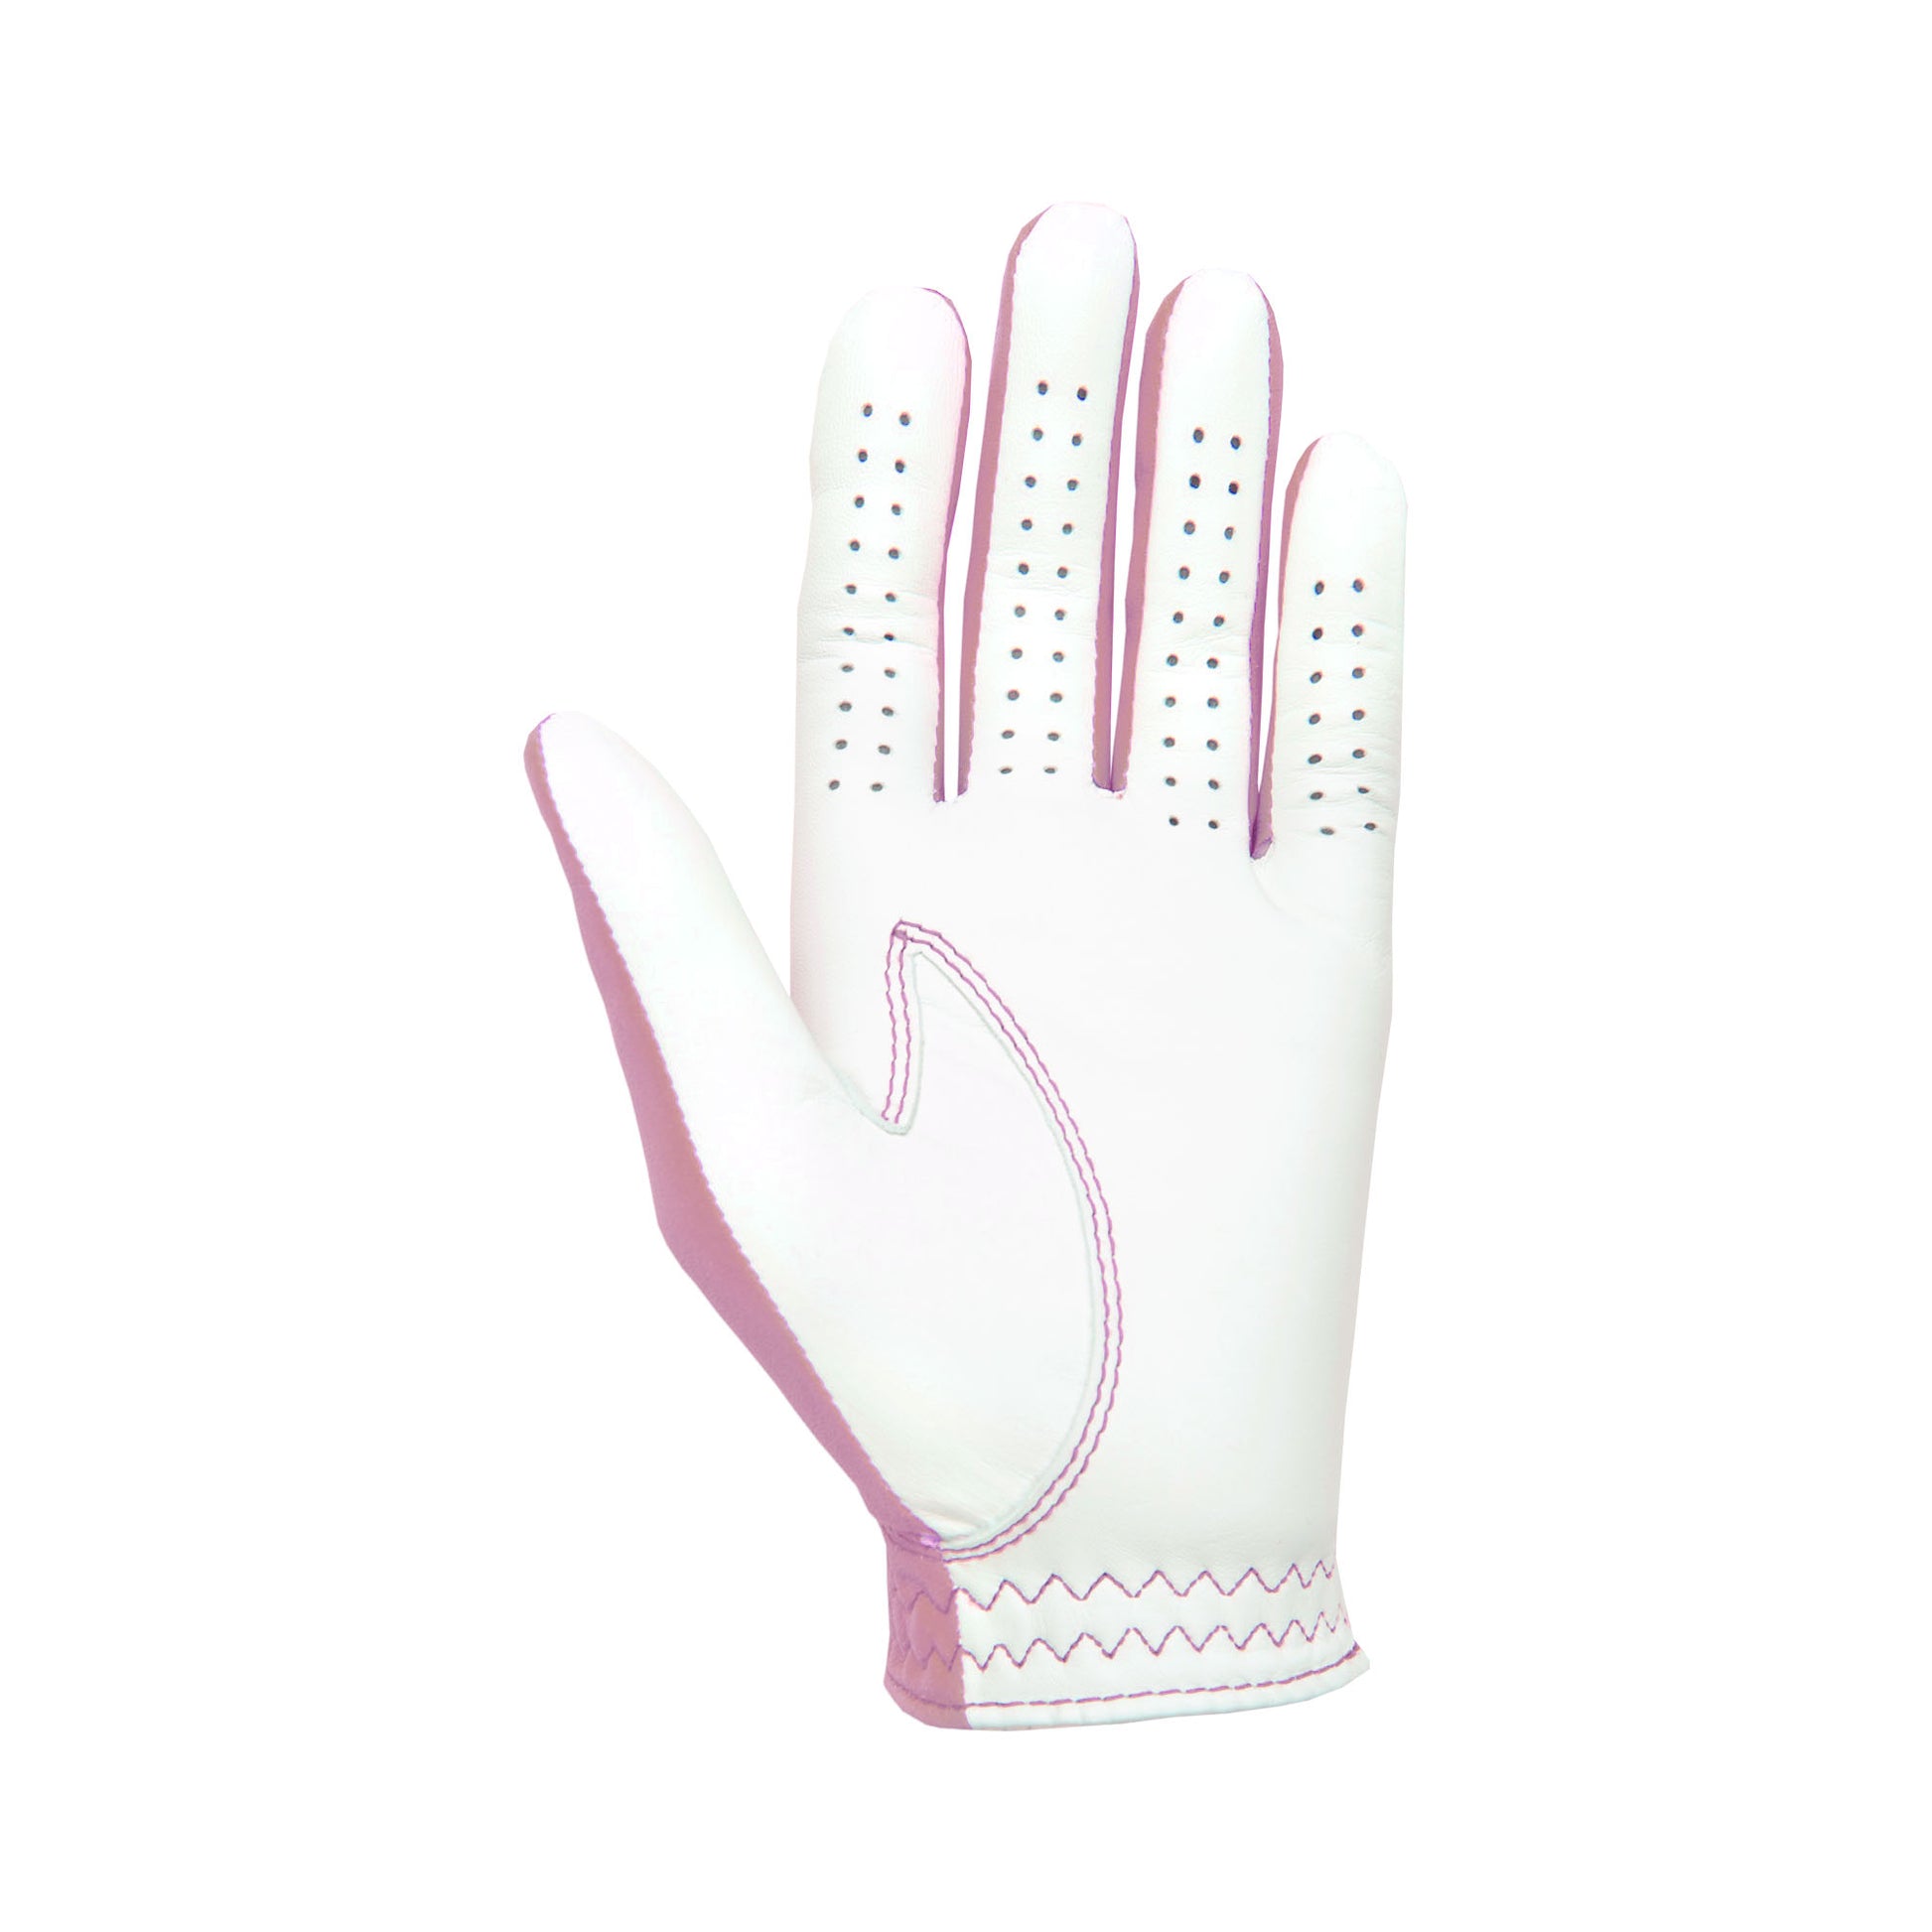 FootJoy Women's Pink Spectrum Golf Glove